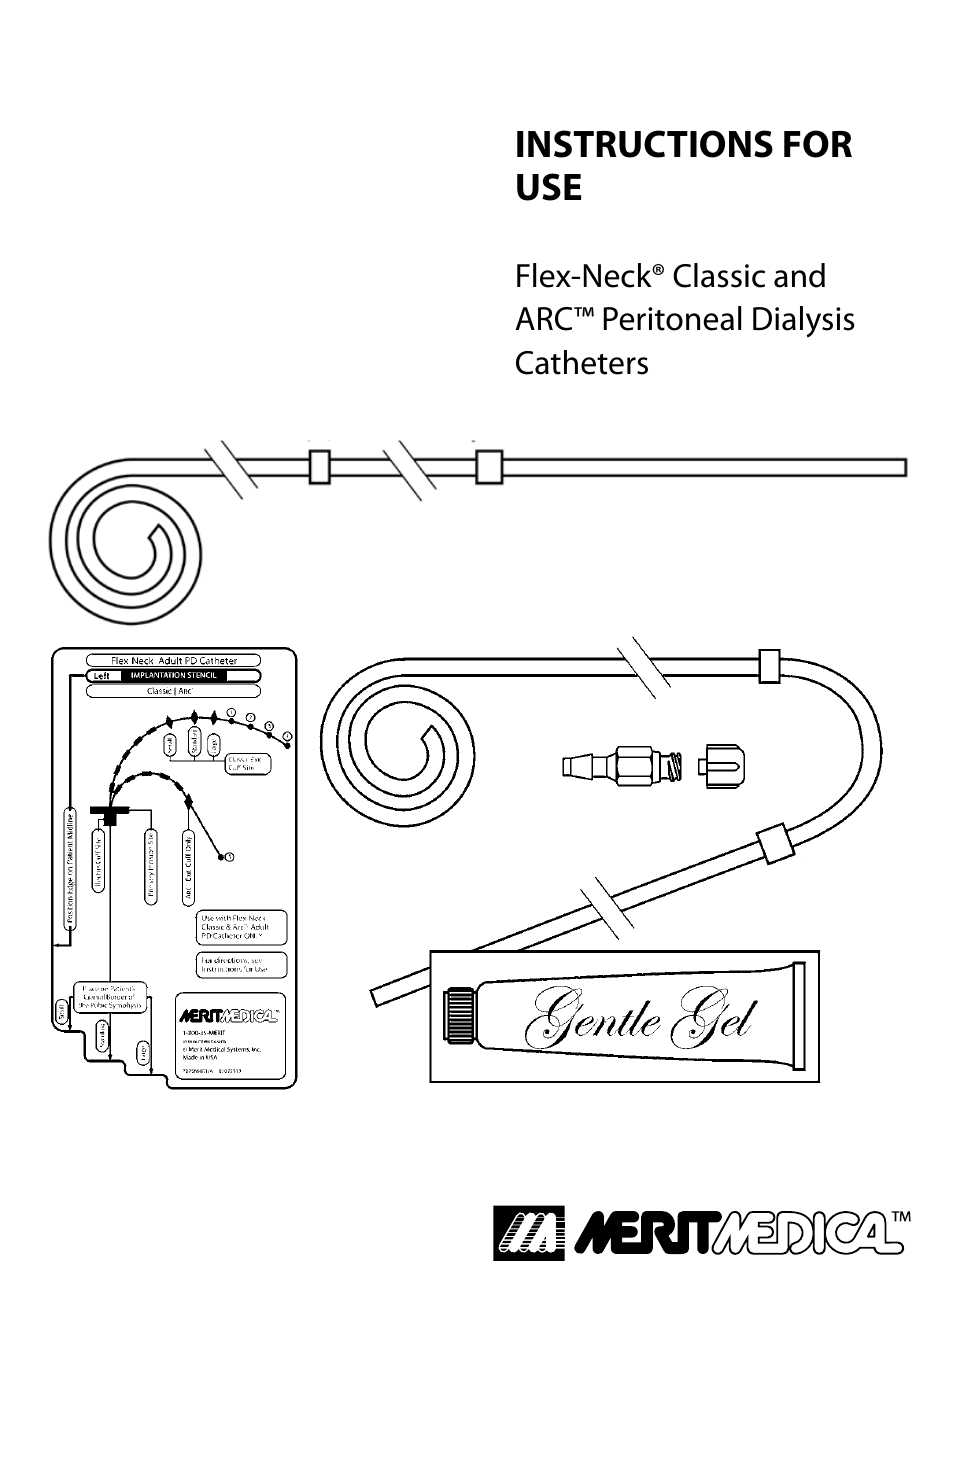 Flex-Neck Classic ARC Catheter